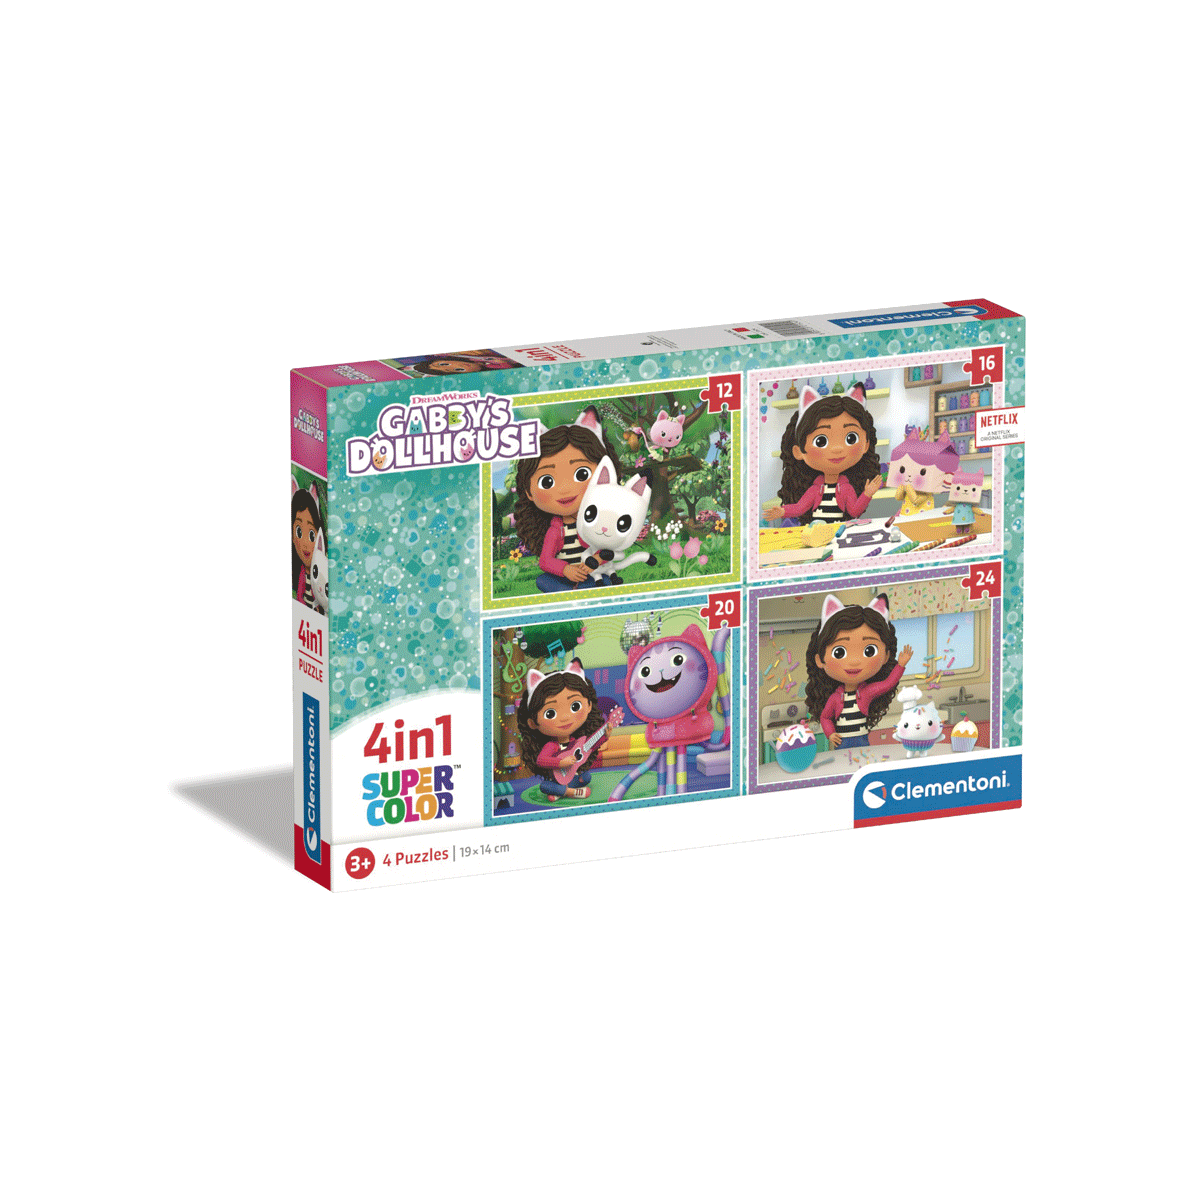 Clementoni supercolor puzzle gabby's dollhouse - 1x12 + 1x16 + 1x20 + 1x24 pezzi, puzzle bambini 3 anni - CLEMENTONI, GABBY'S DOLLHOUSE